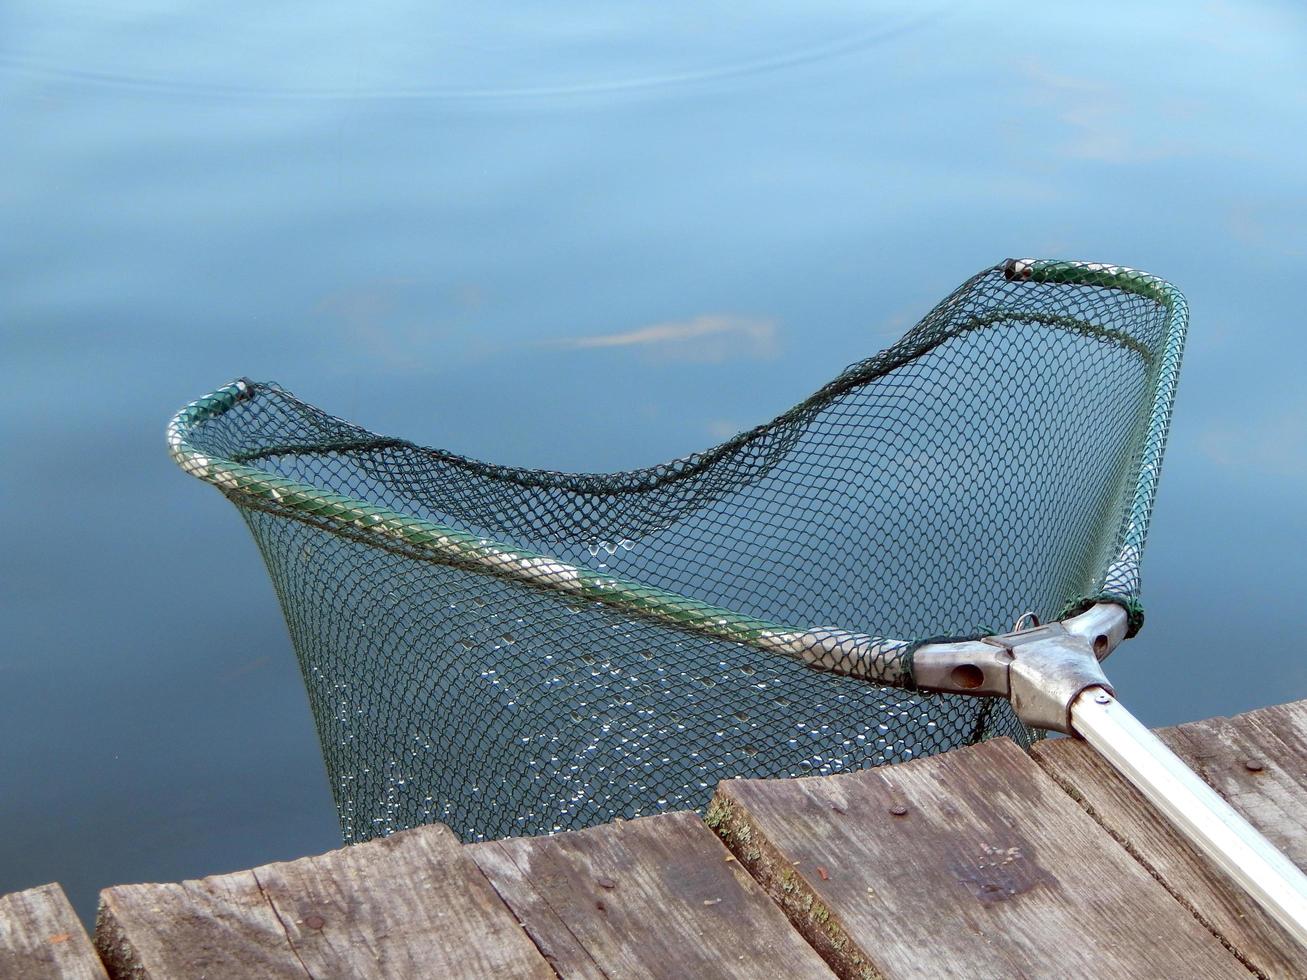 aparejos de pesca para cañas de pescar, flotadores, redes foto